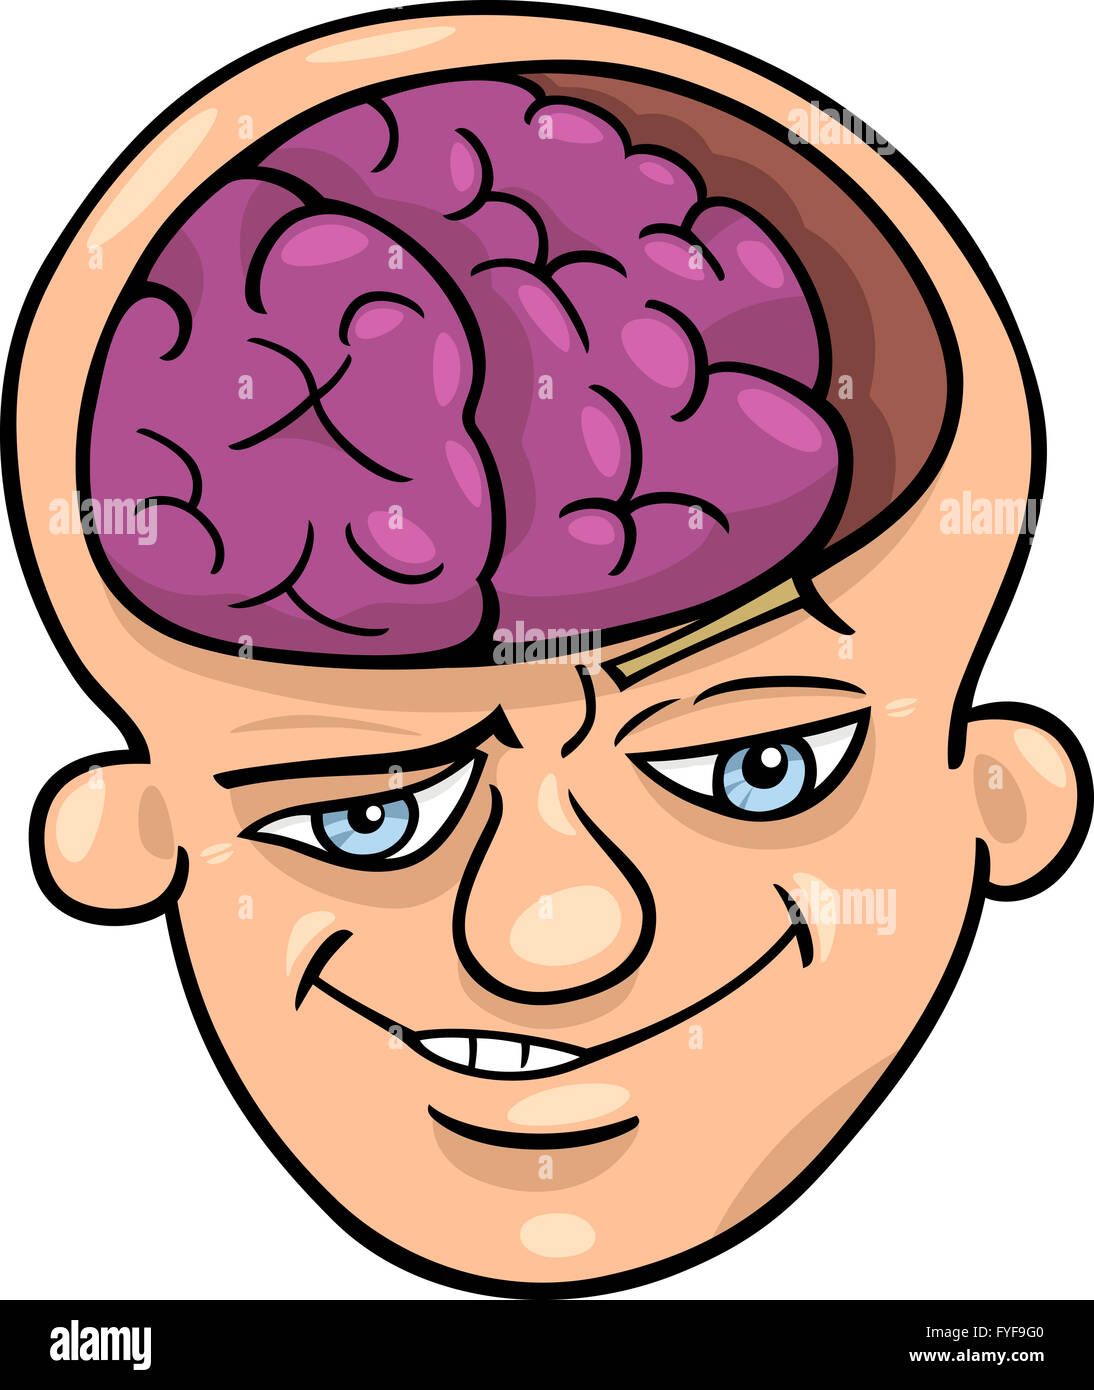 big brain cartoon character